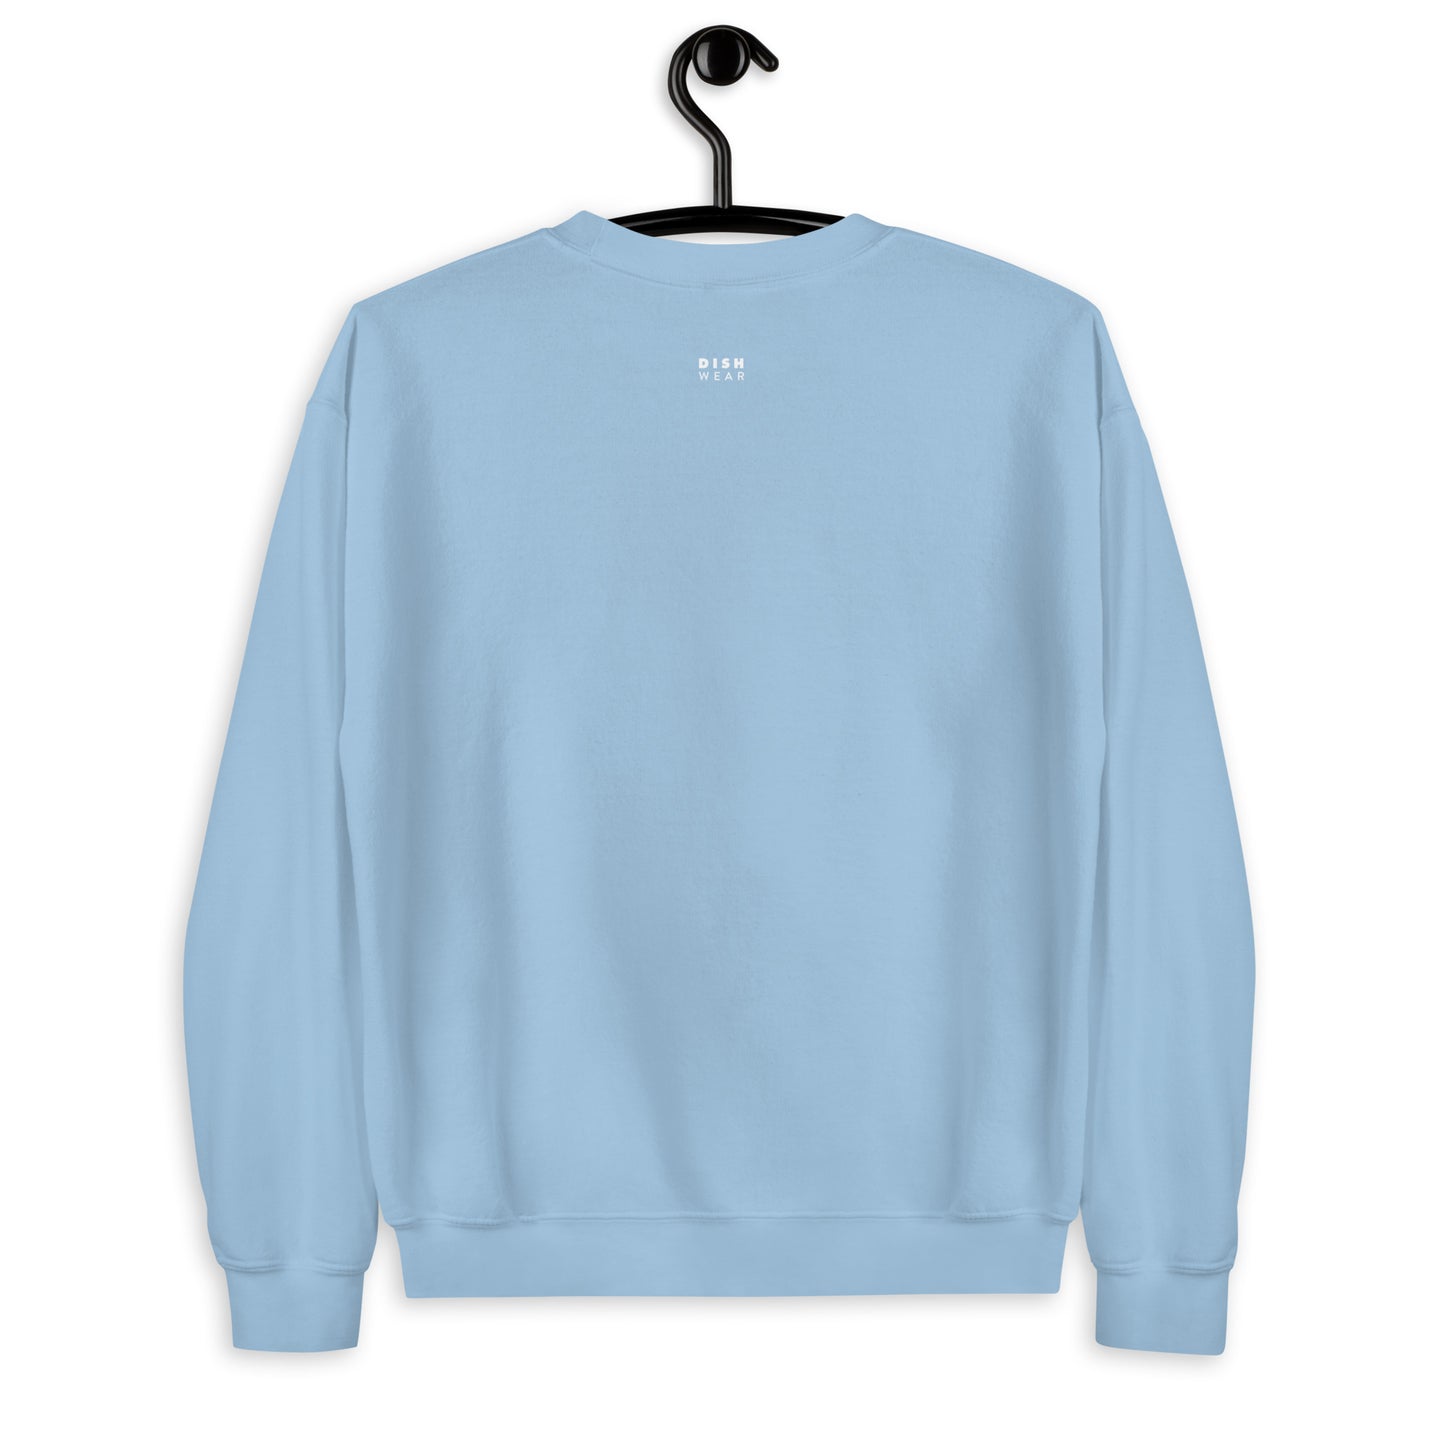 Crouton Sweatshirt - Straight Font